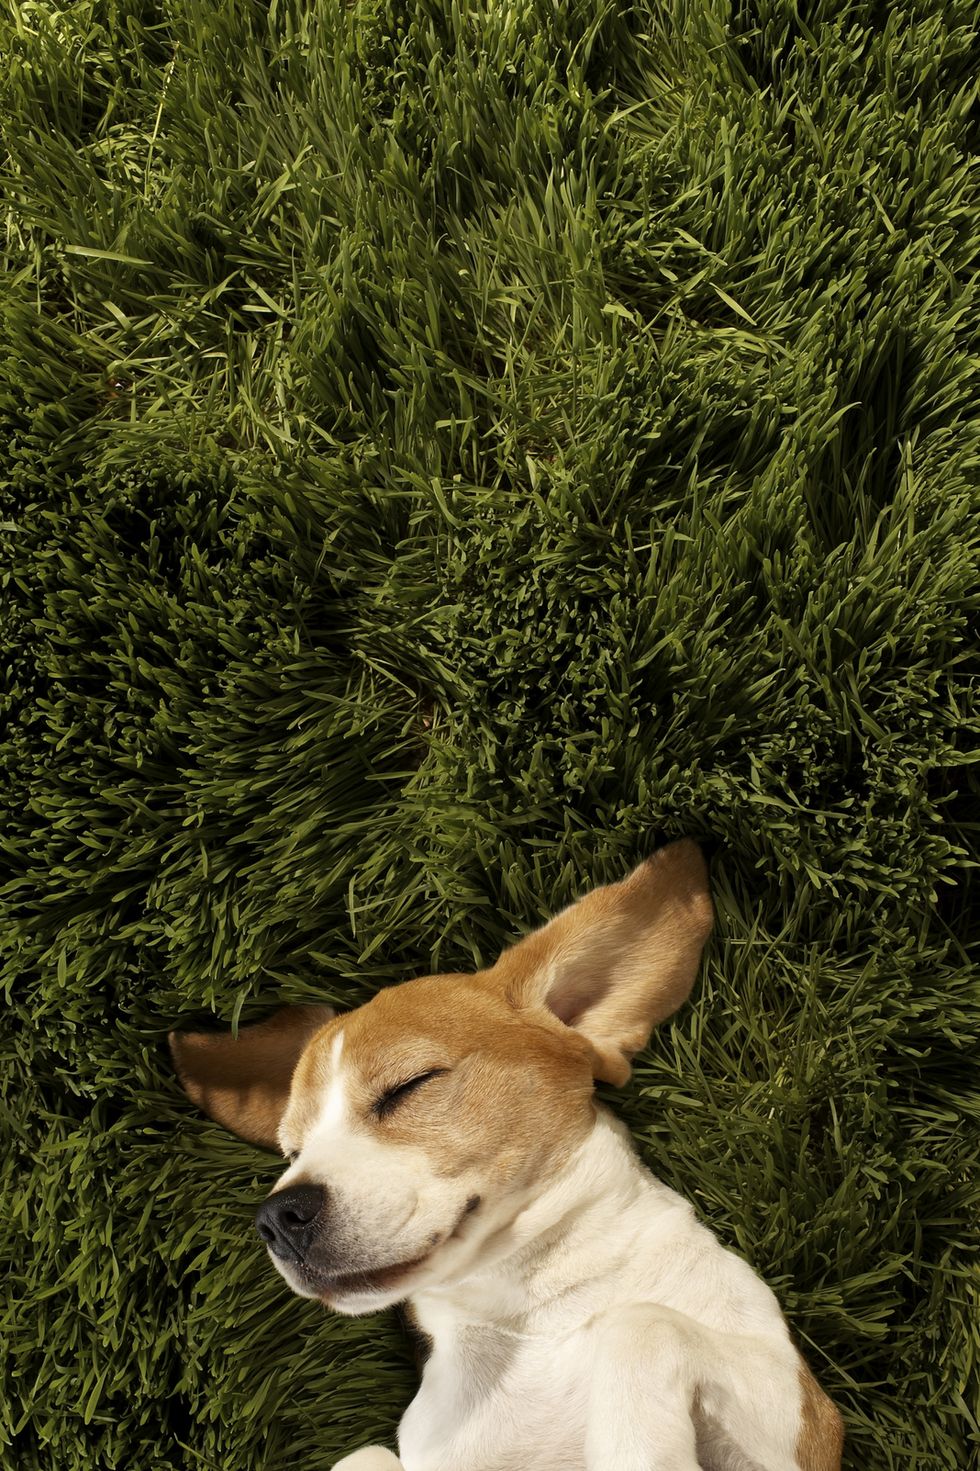 dog in lying in grass sleeping